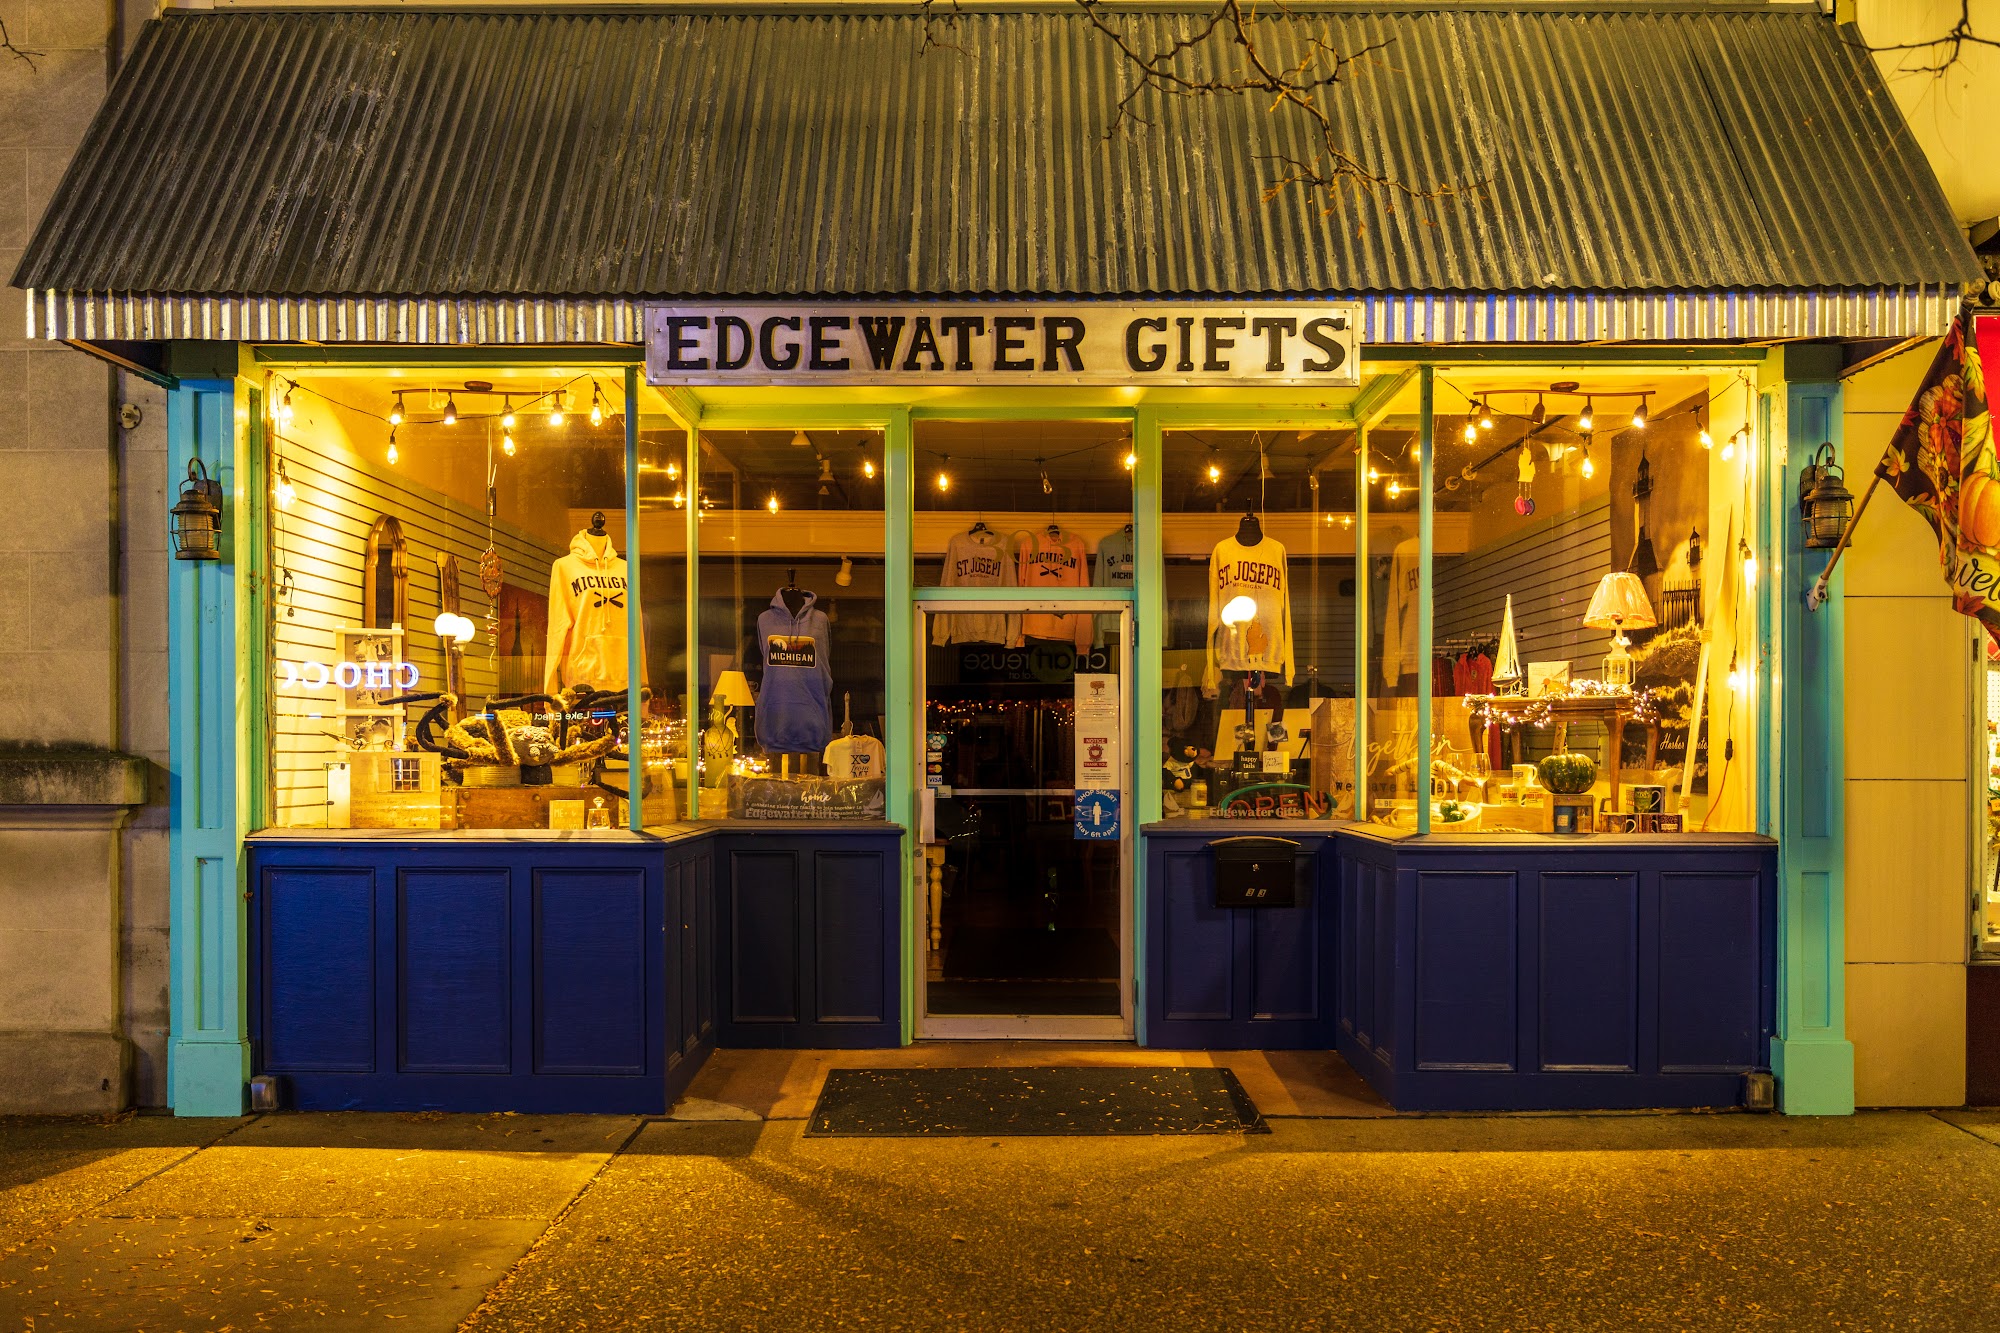 Edgewater Gifts